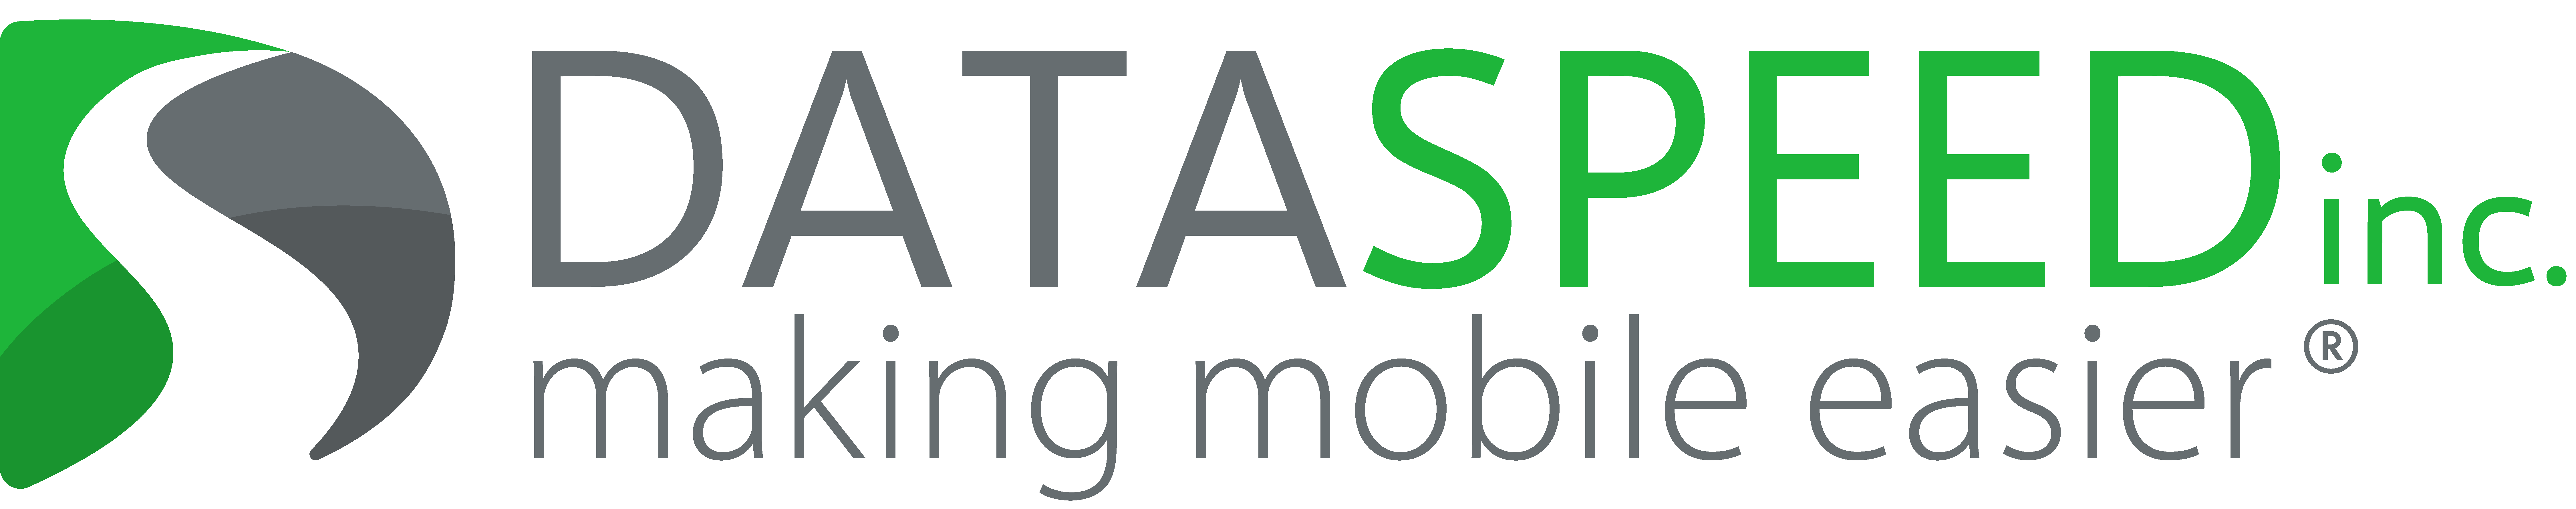 Dataspeed logo and slogan